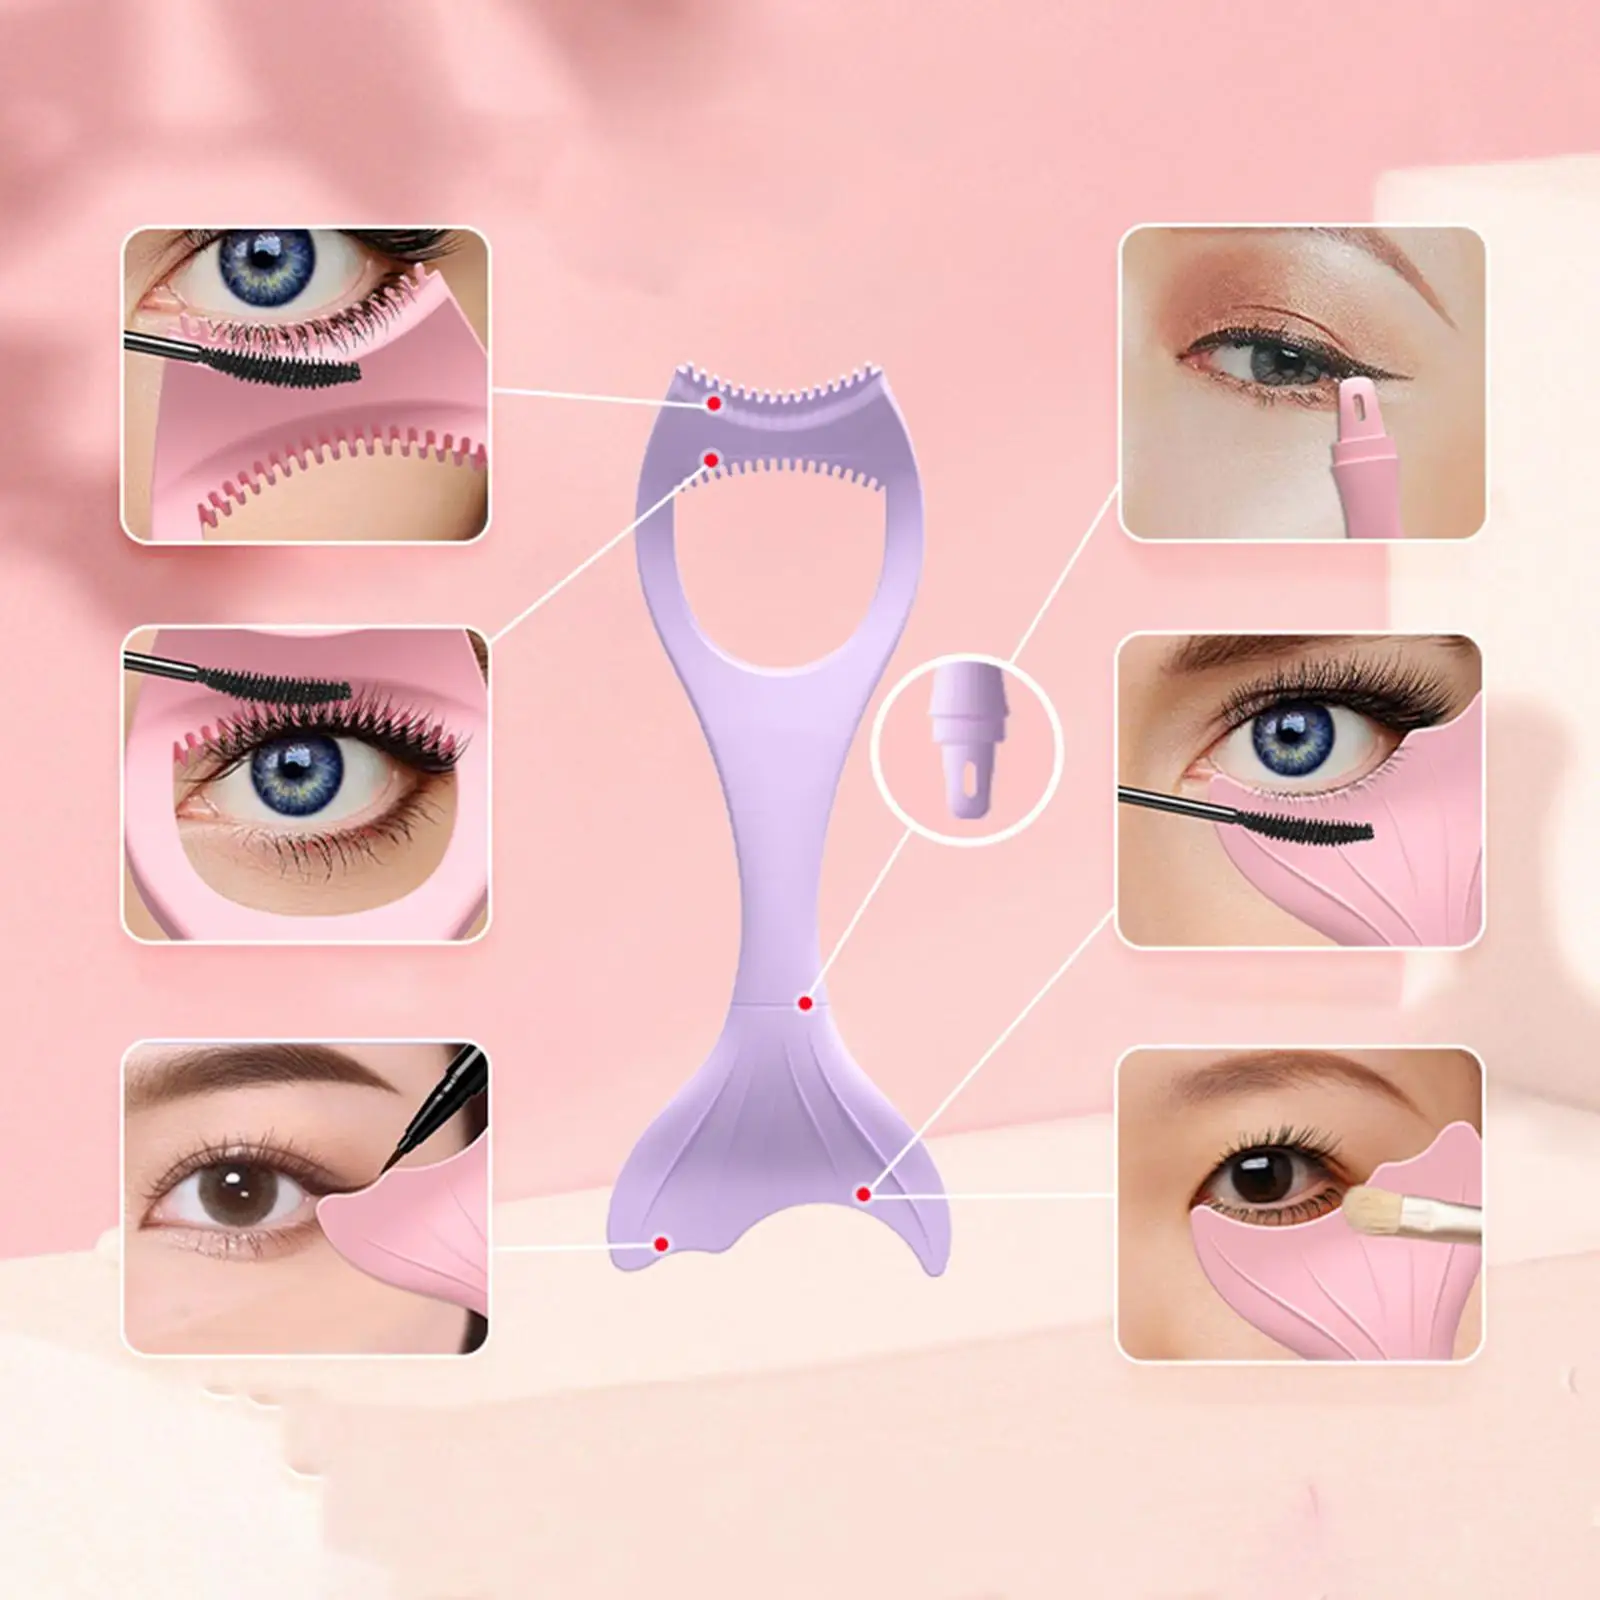 Silicone Eyeliner Template Guide Stencil, Eye Makeup Tool Guide Tool Eyeliner Assistant Helper for Women Girls Beginners